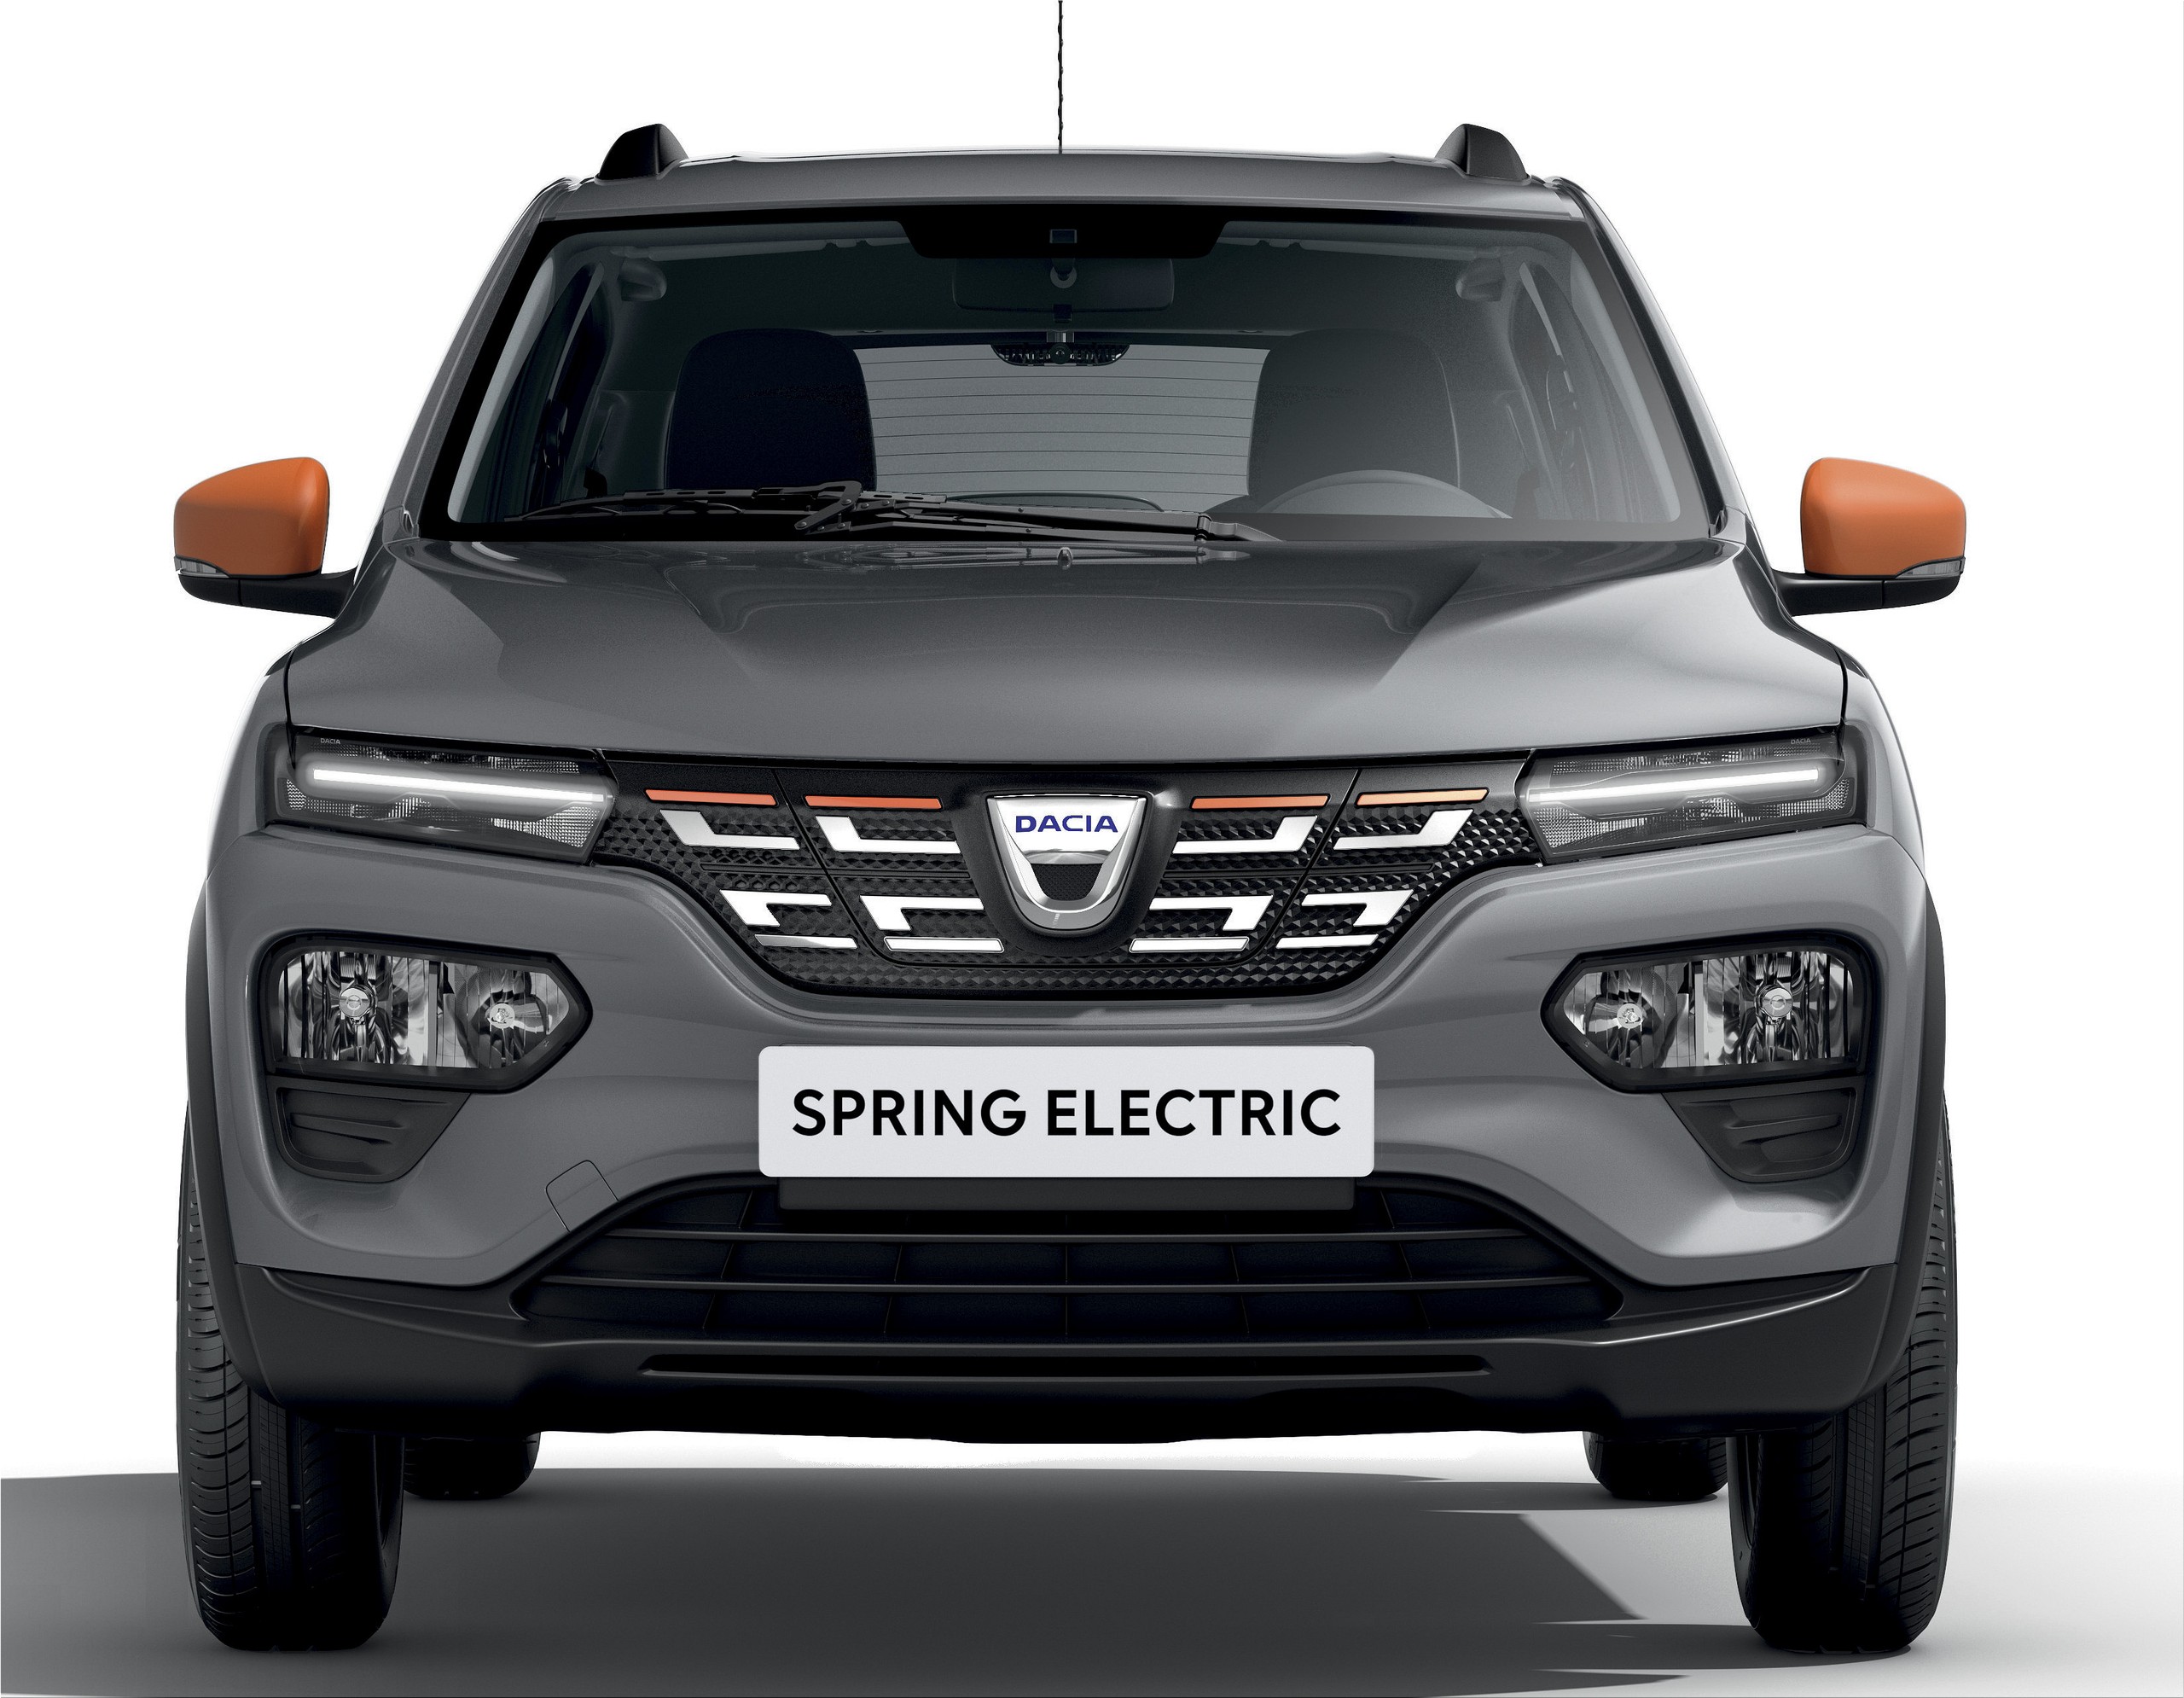 Dacia Electric Vehicles List - Cindra Loella